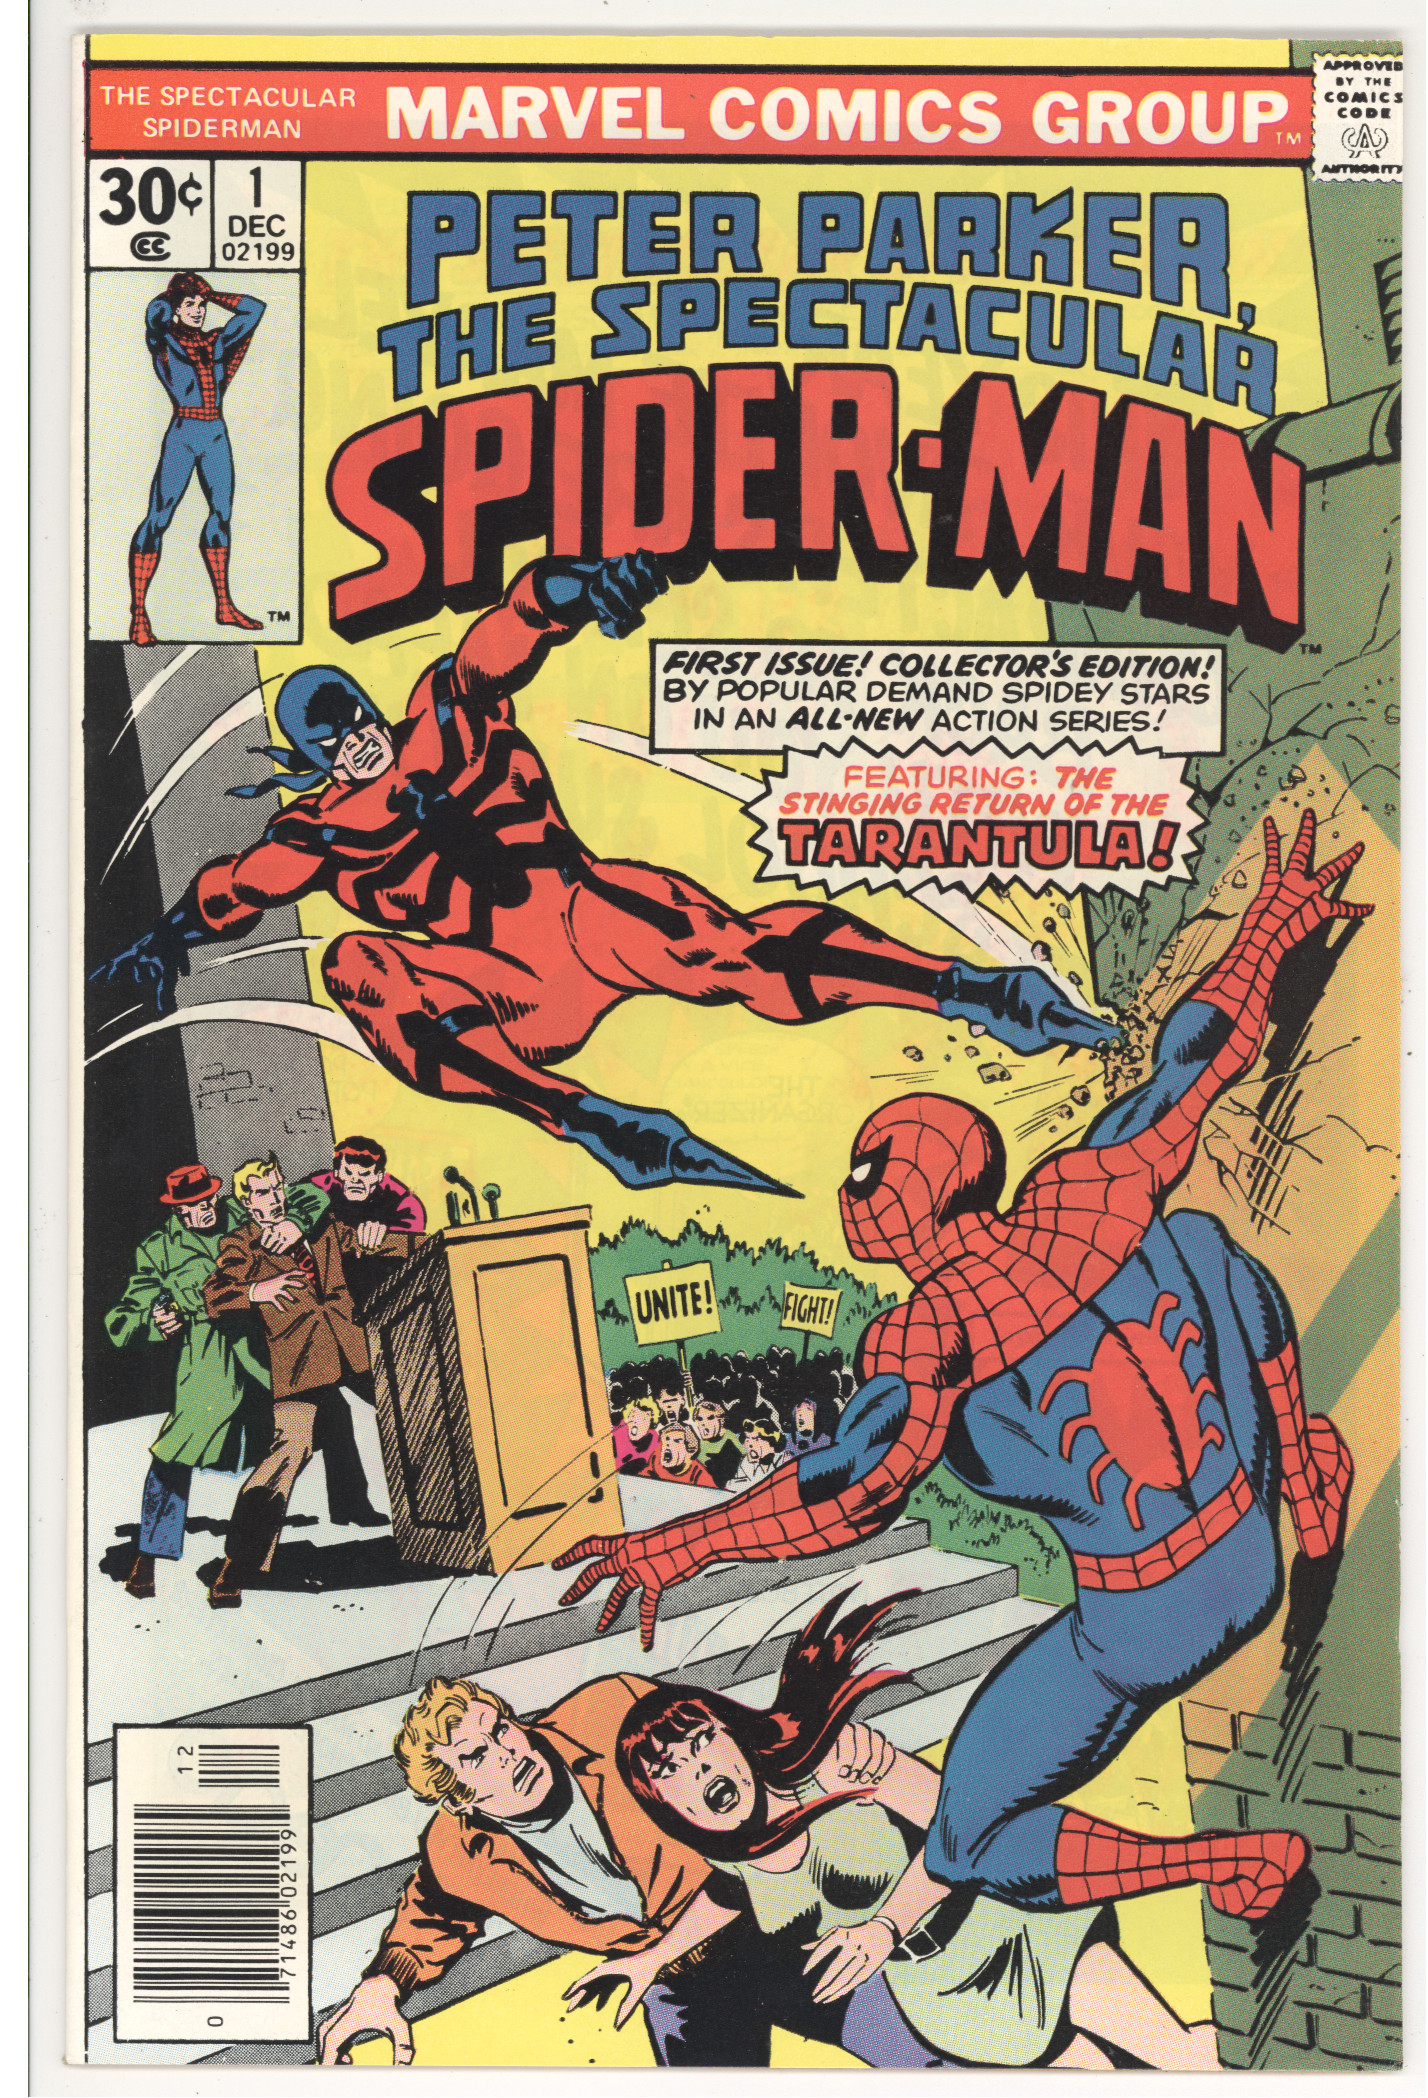 Spectacular Spider-Man #1 front